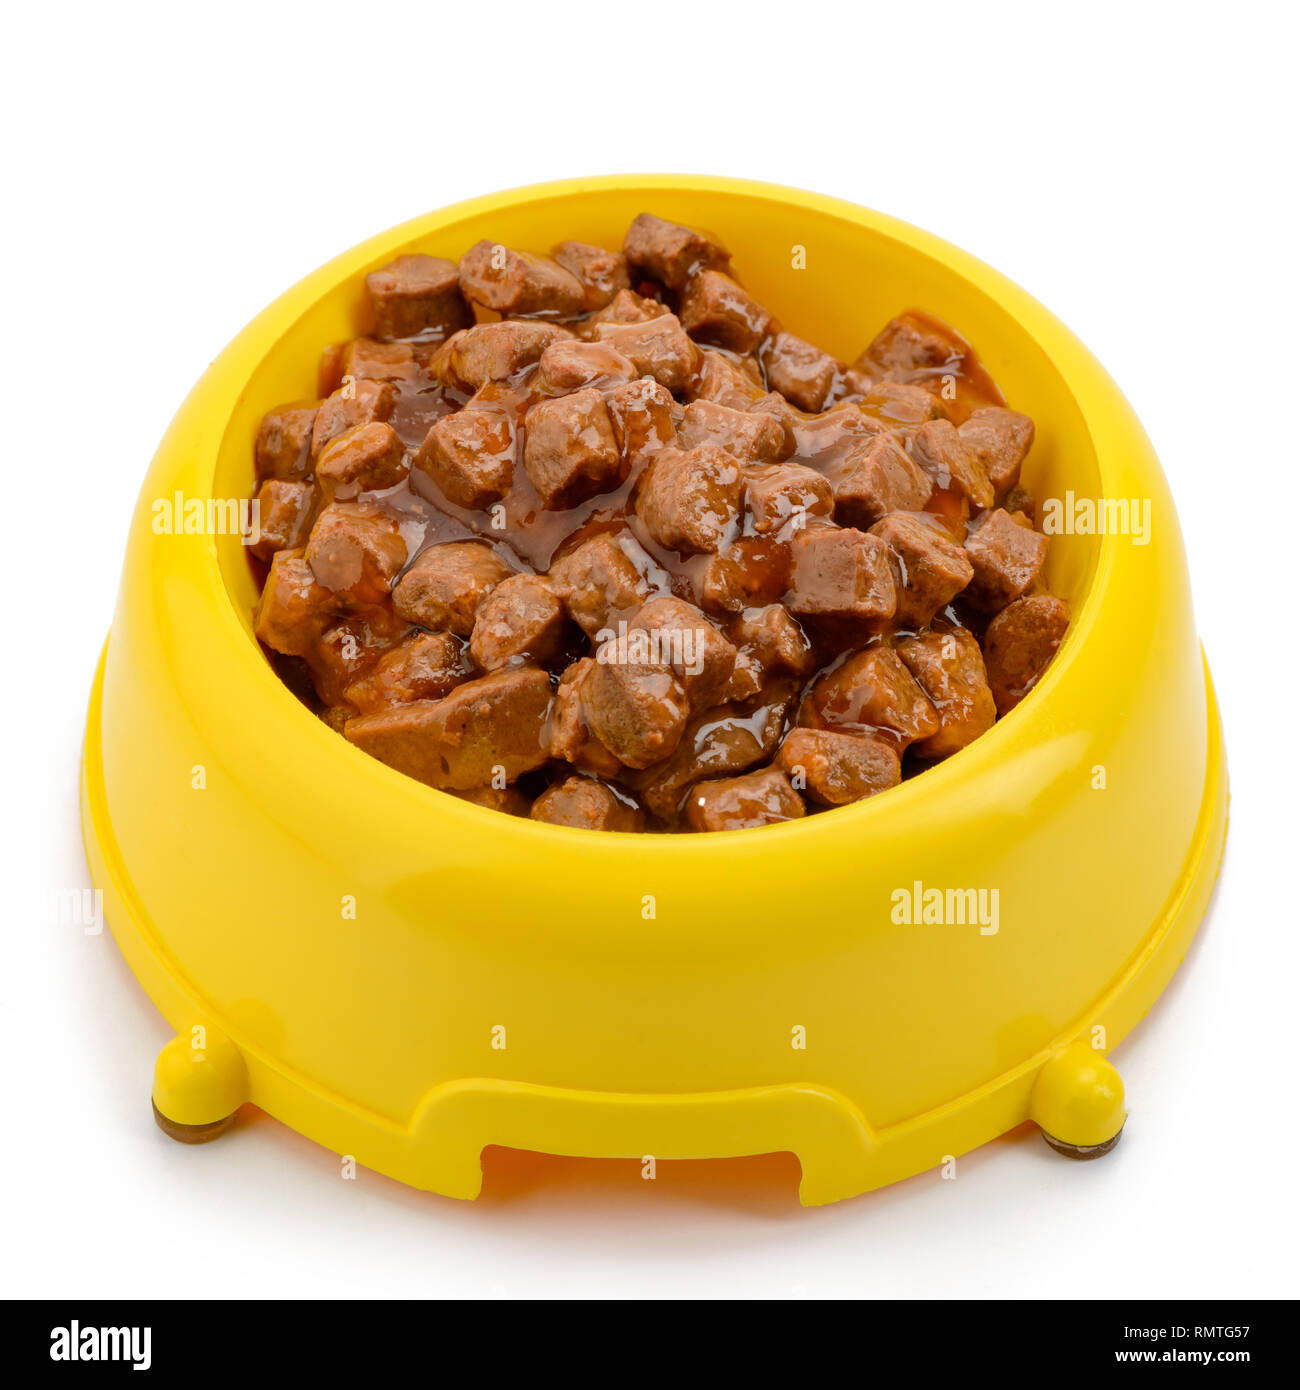 Bowl of wet pet food Stock Photo - Alamy